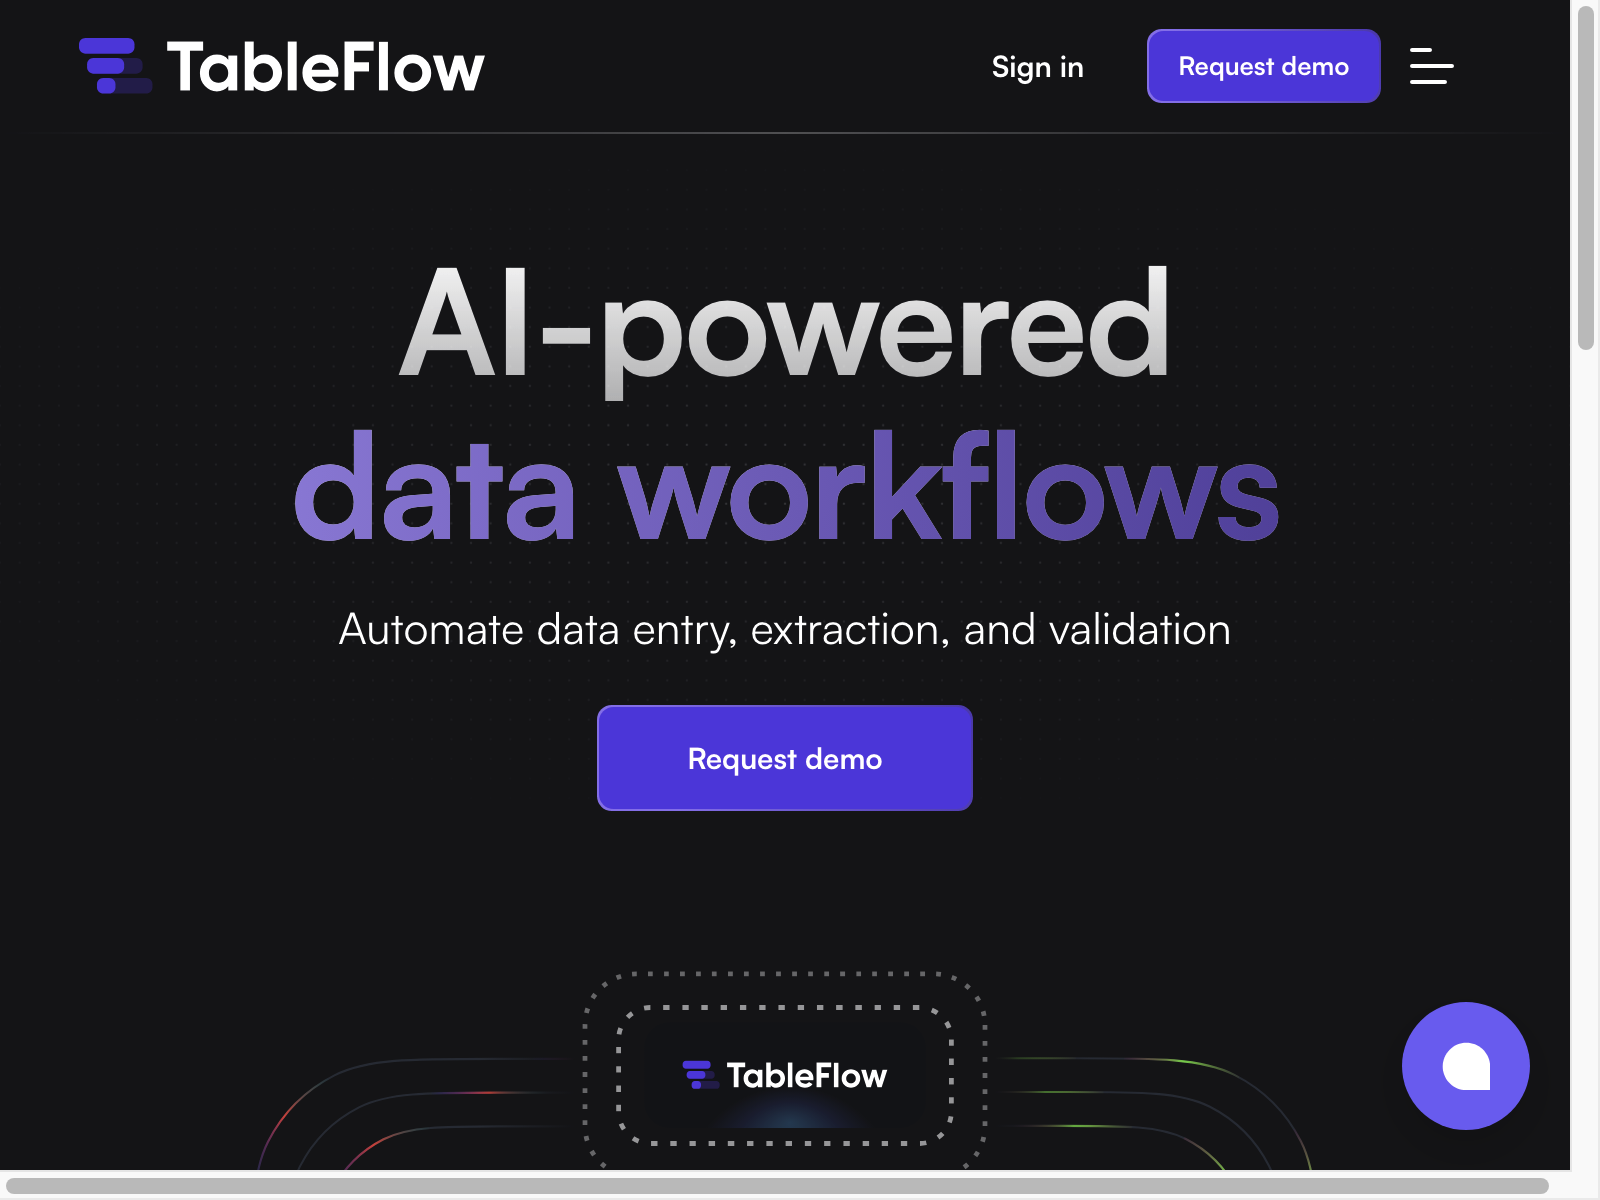 TableFlow Review: Pros, Cons, Alternatives